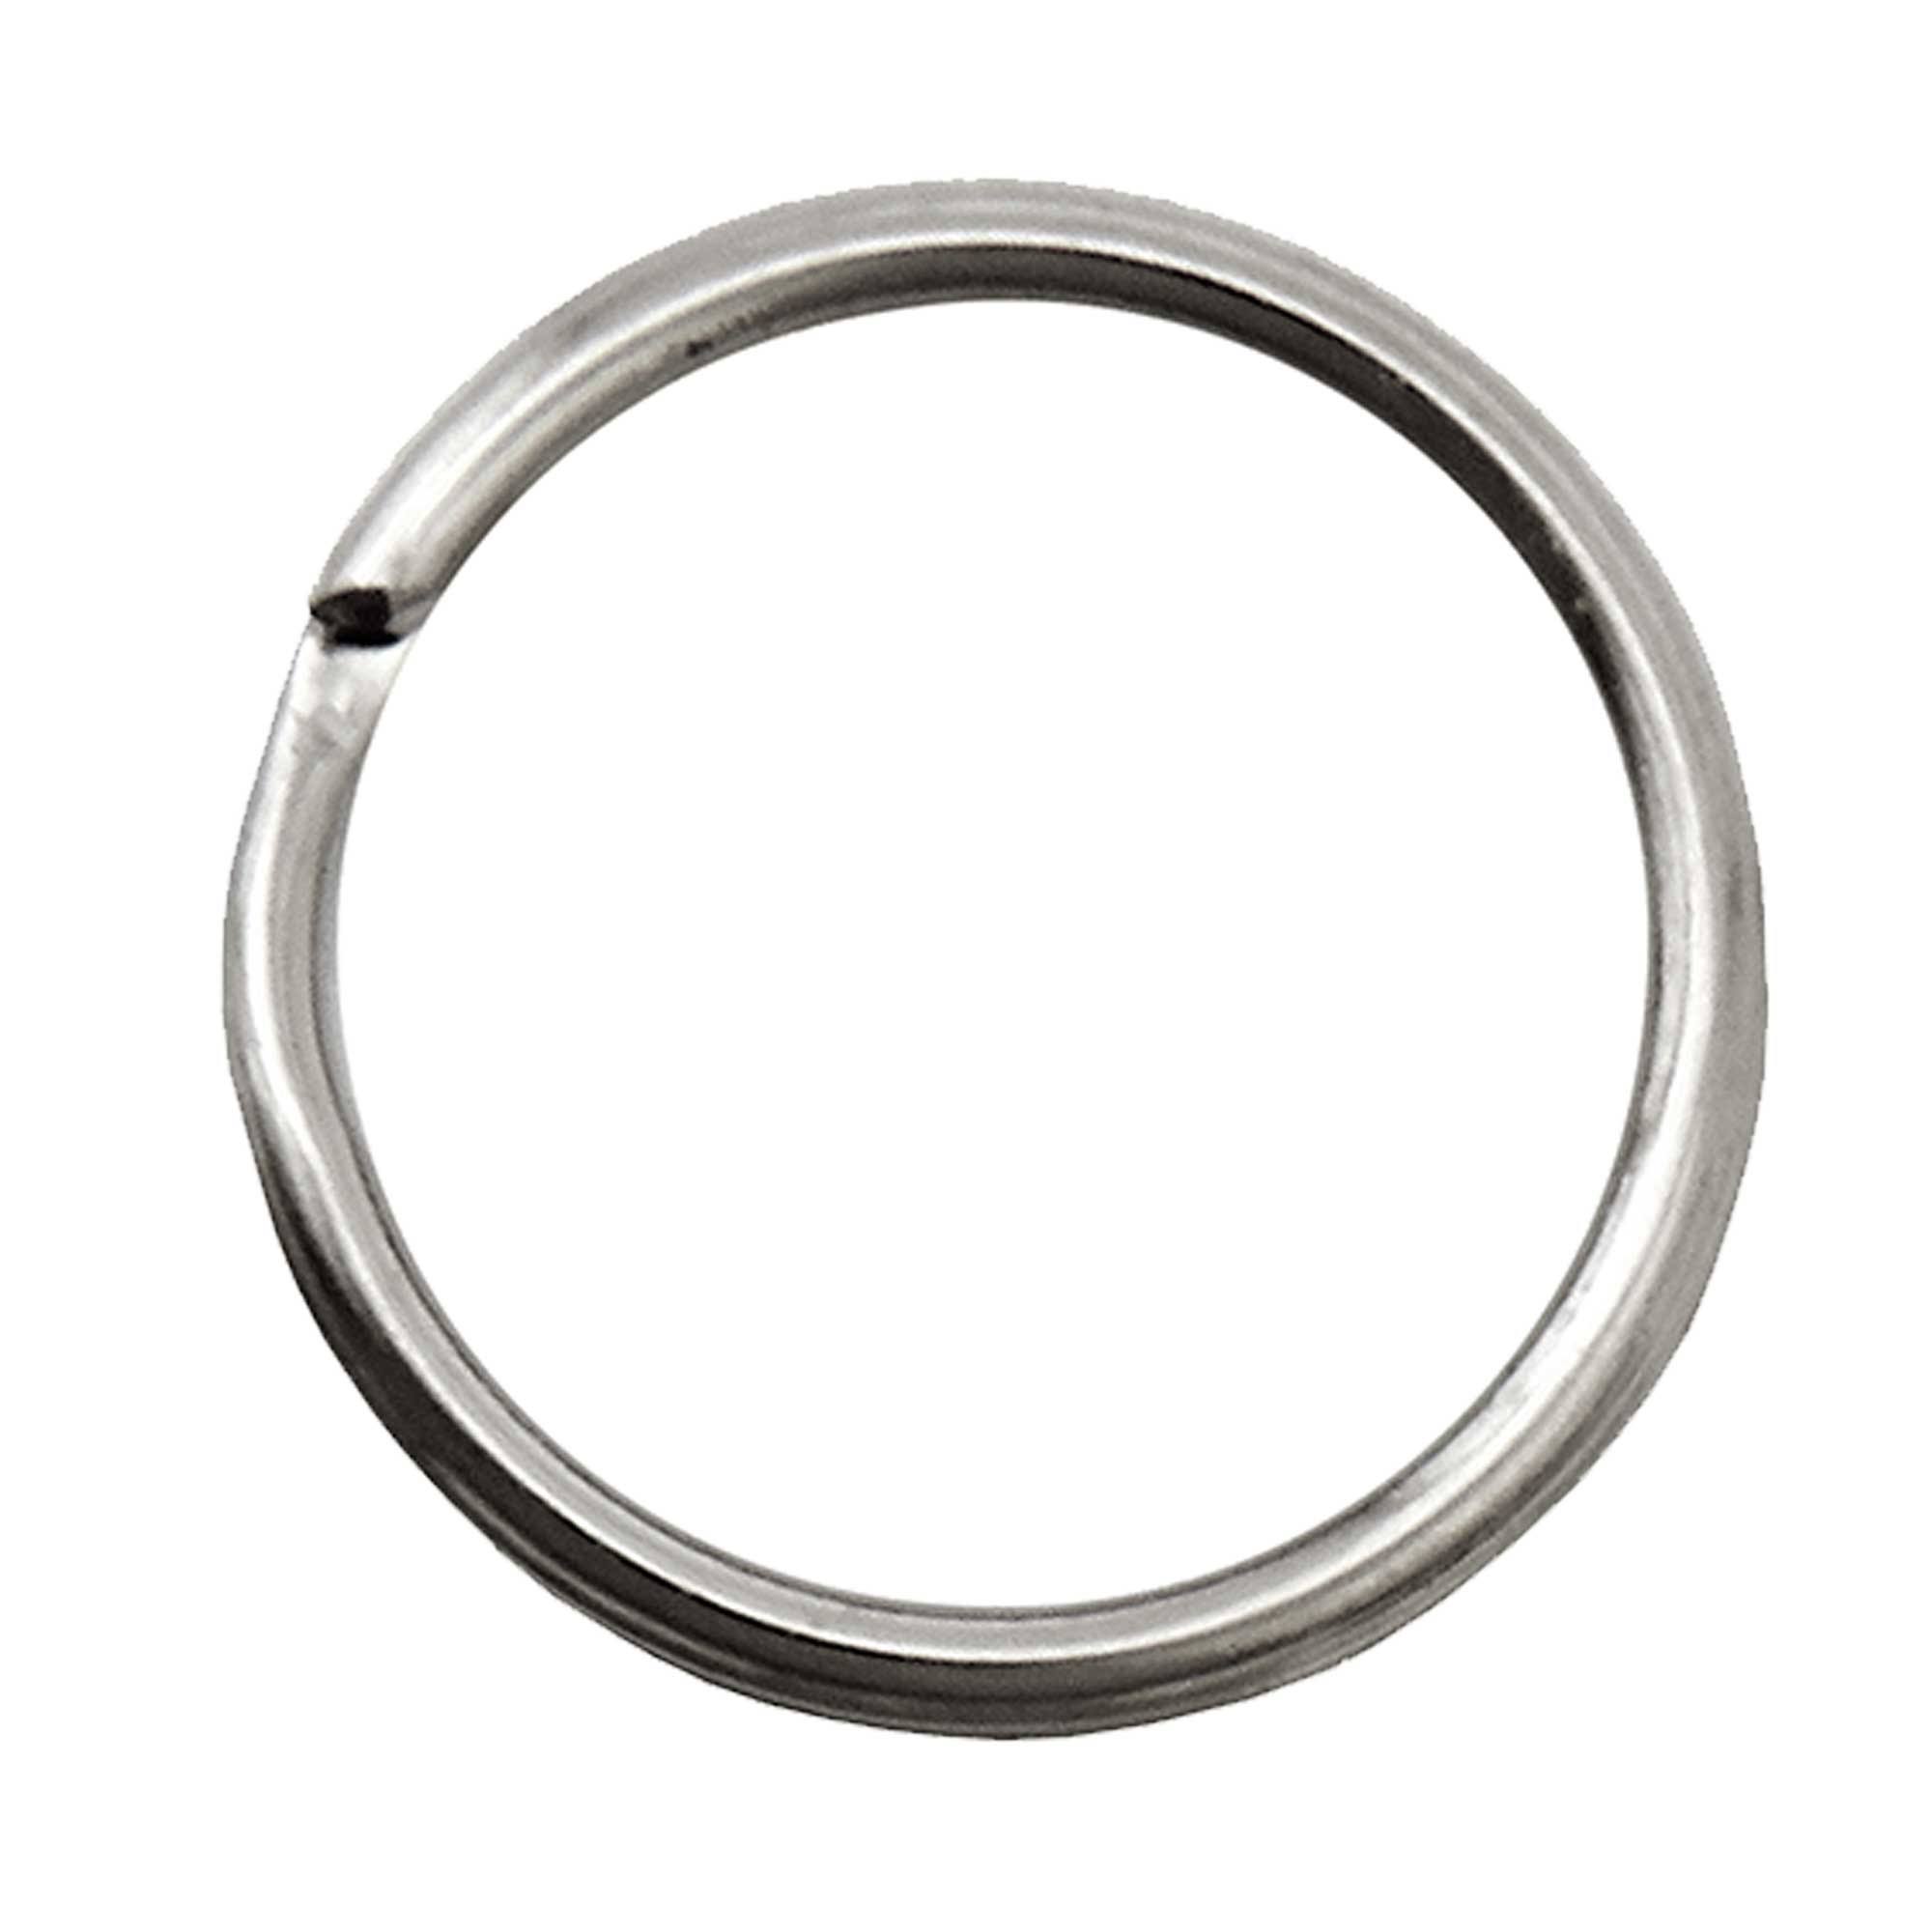 Hy-ko Products Split Key Ring